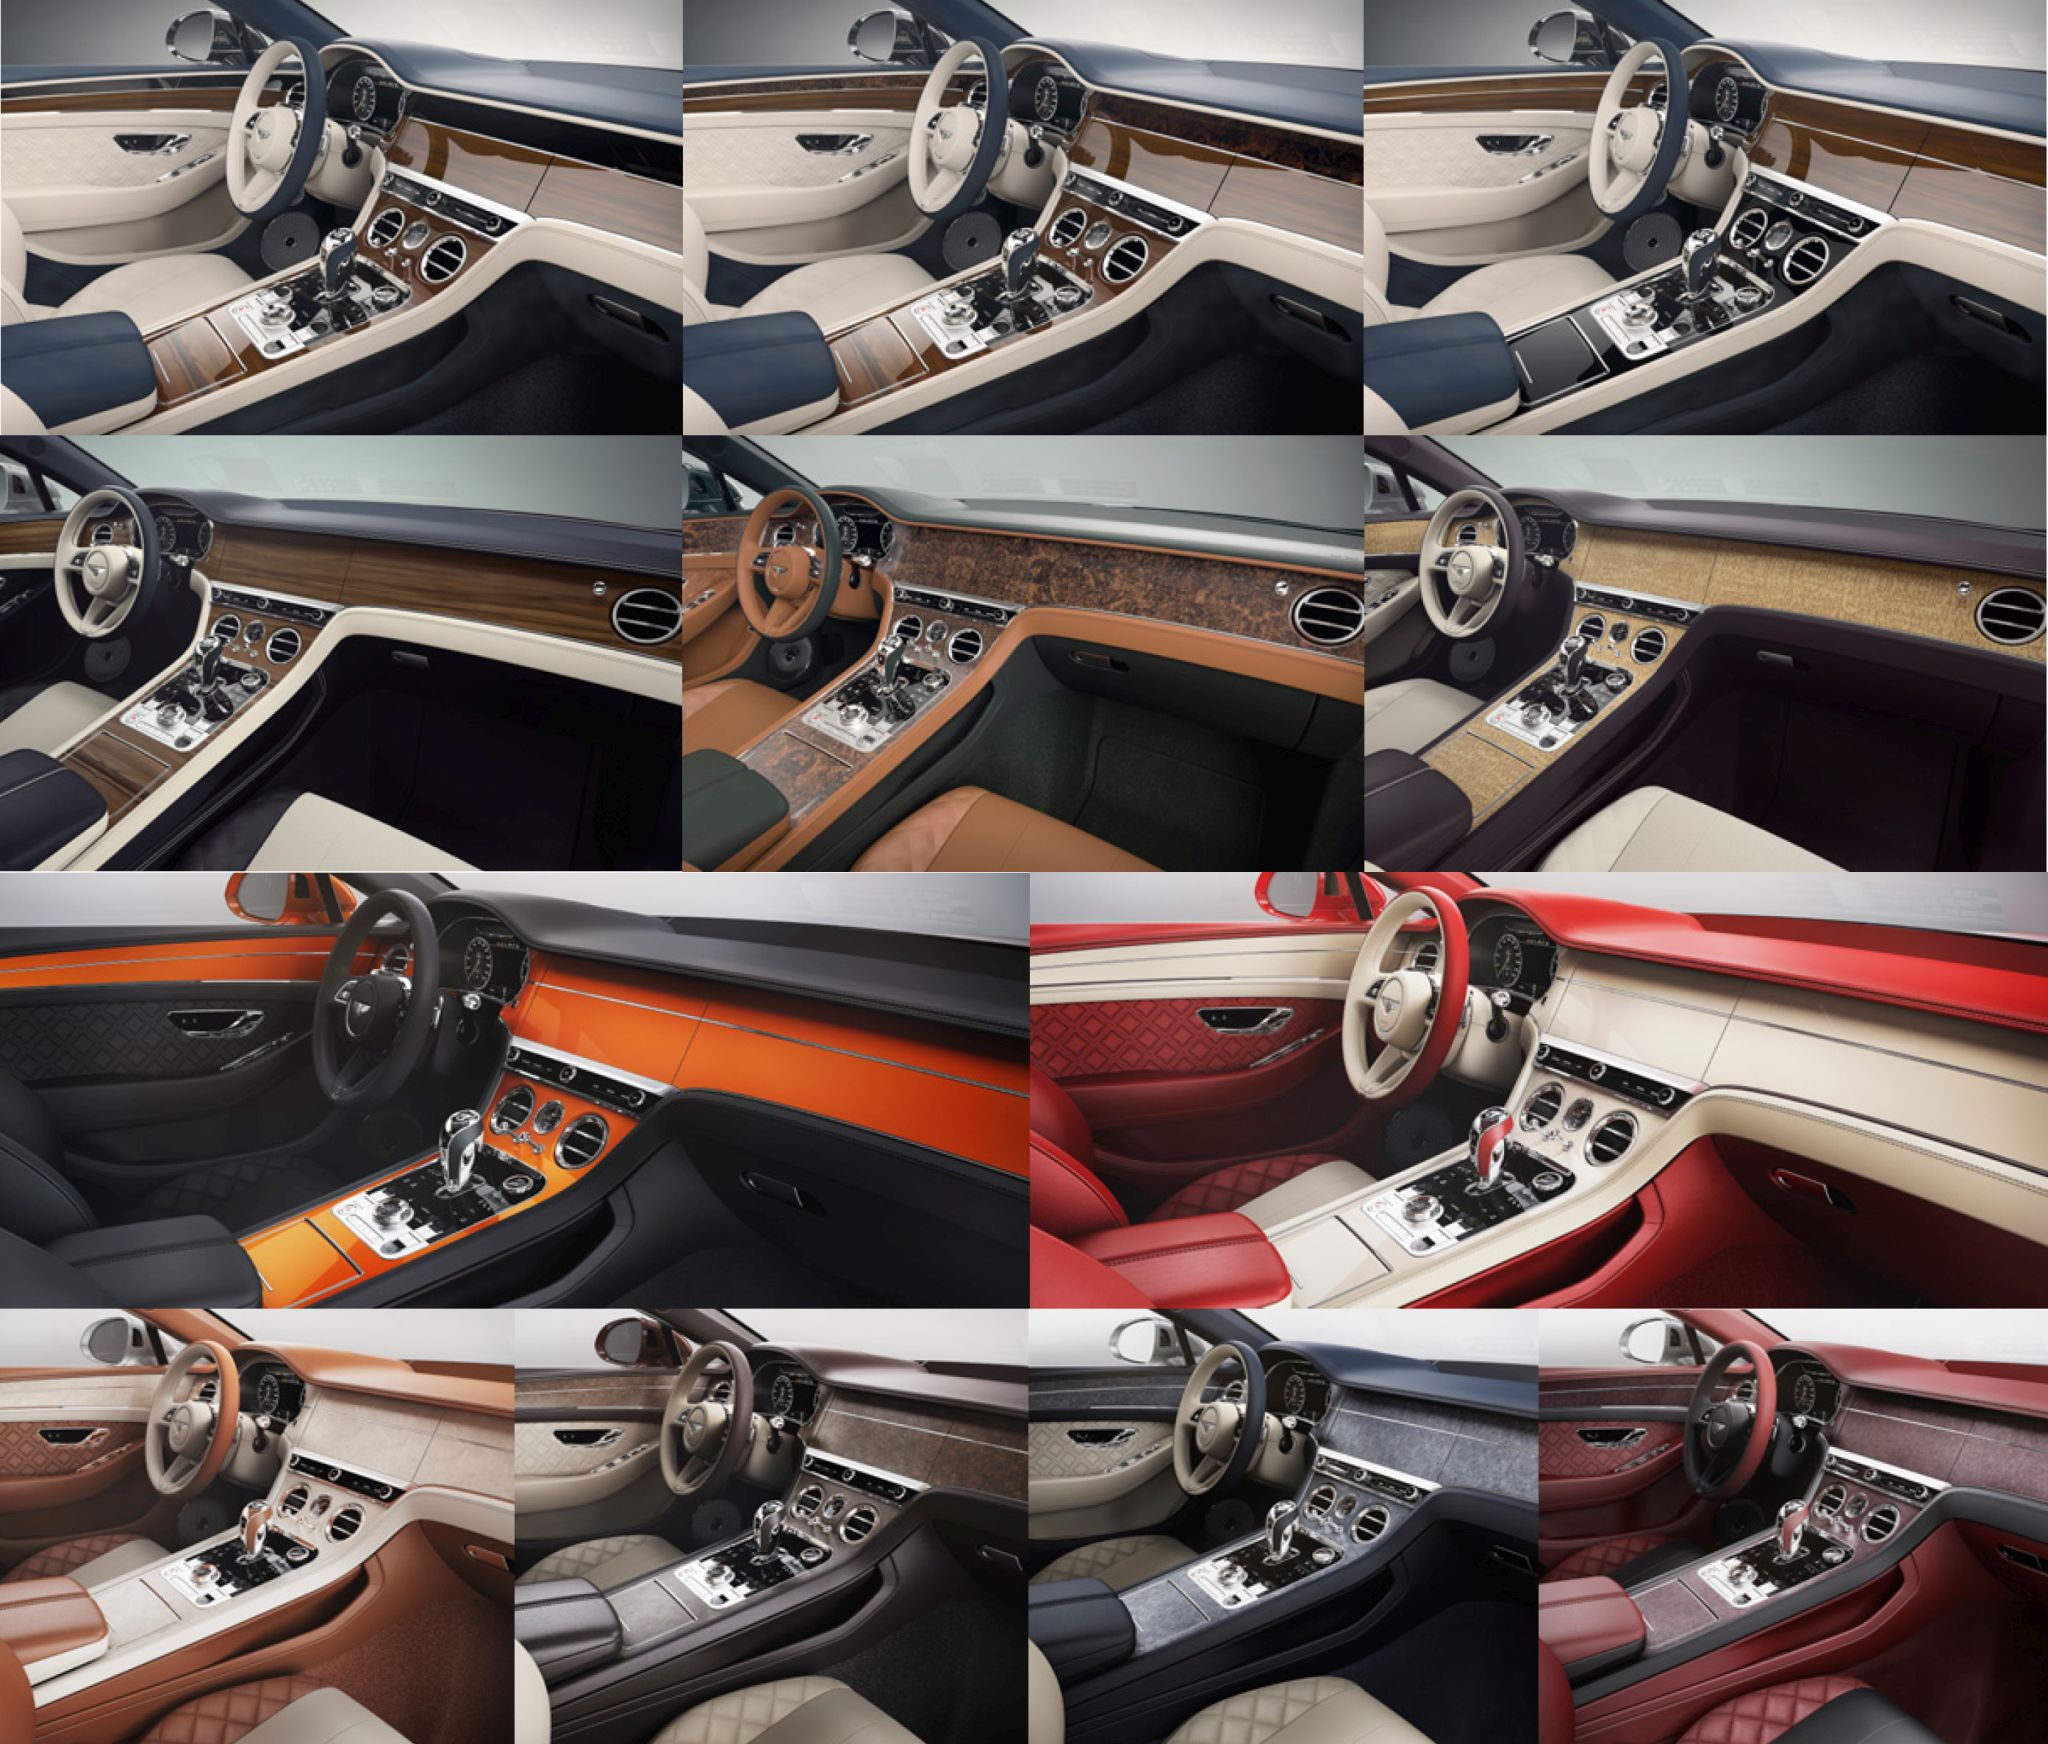 5000 opcji personalizacji od Bentleya